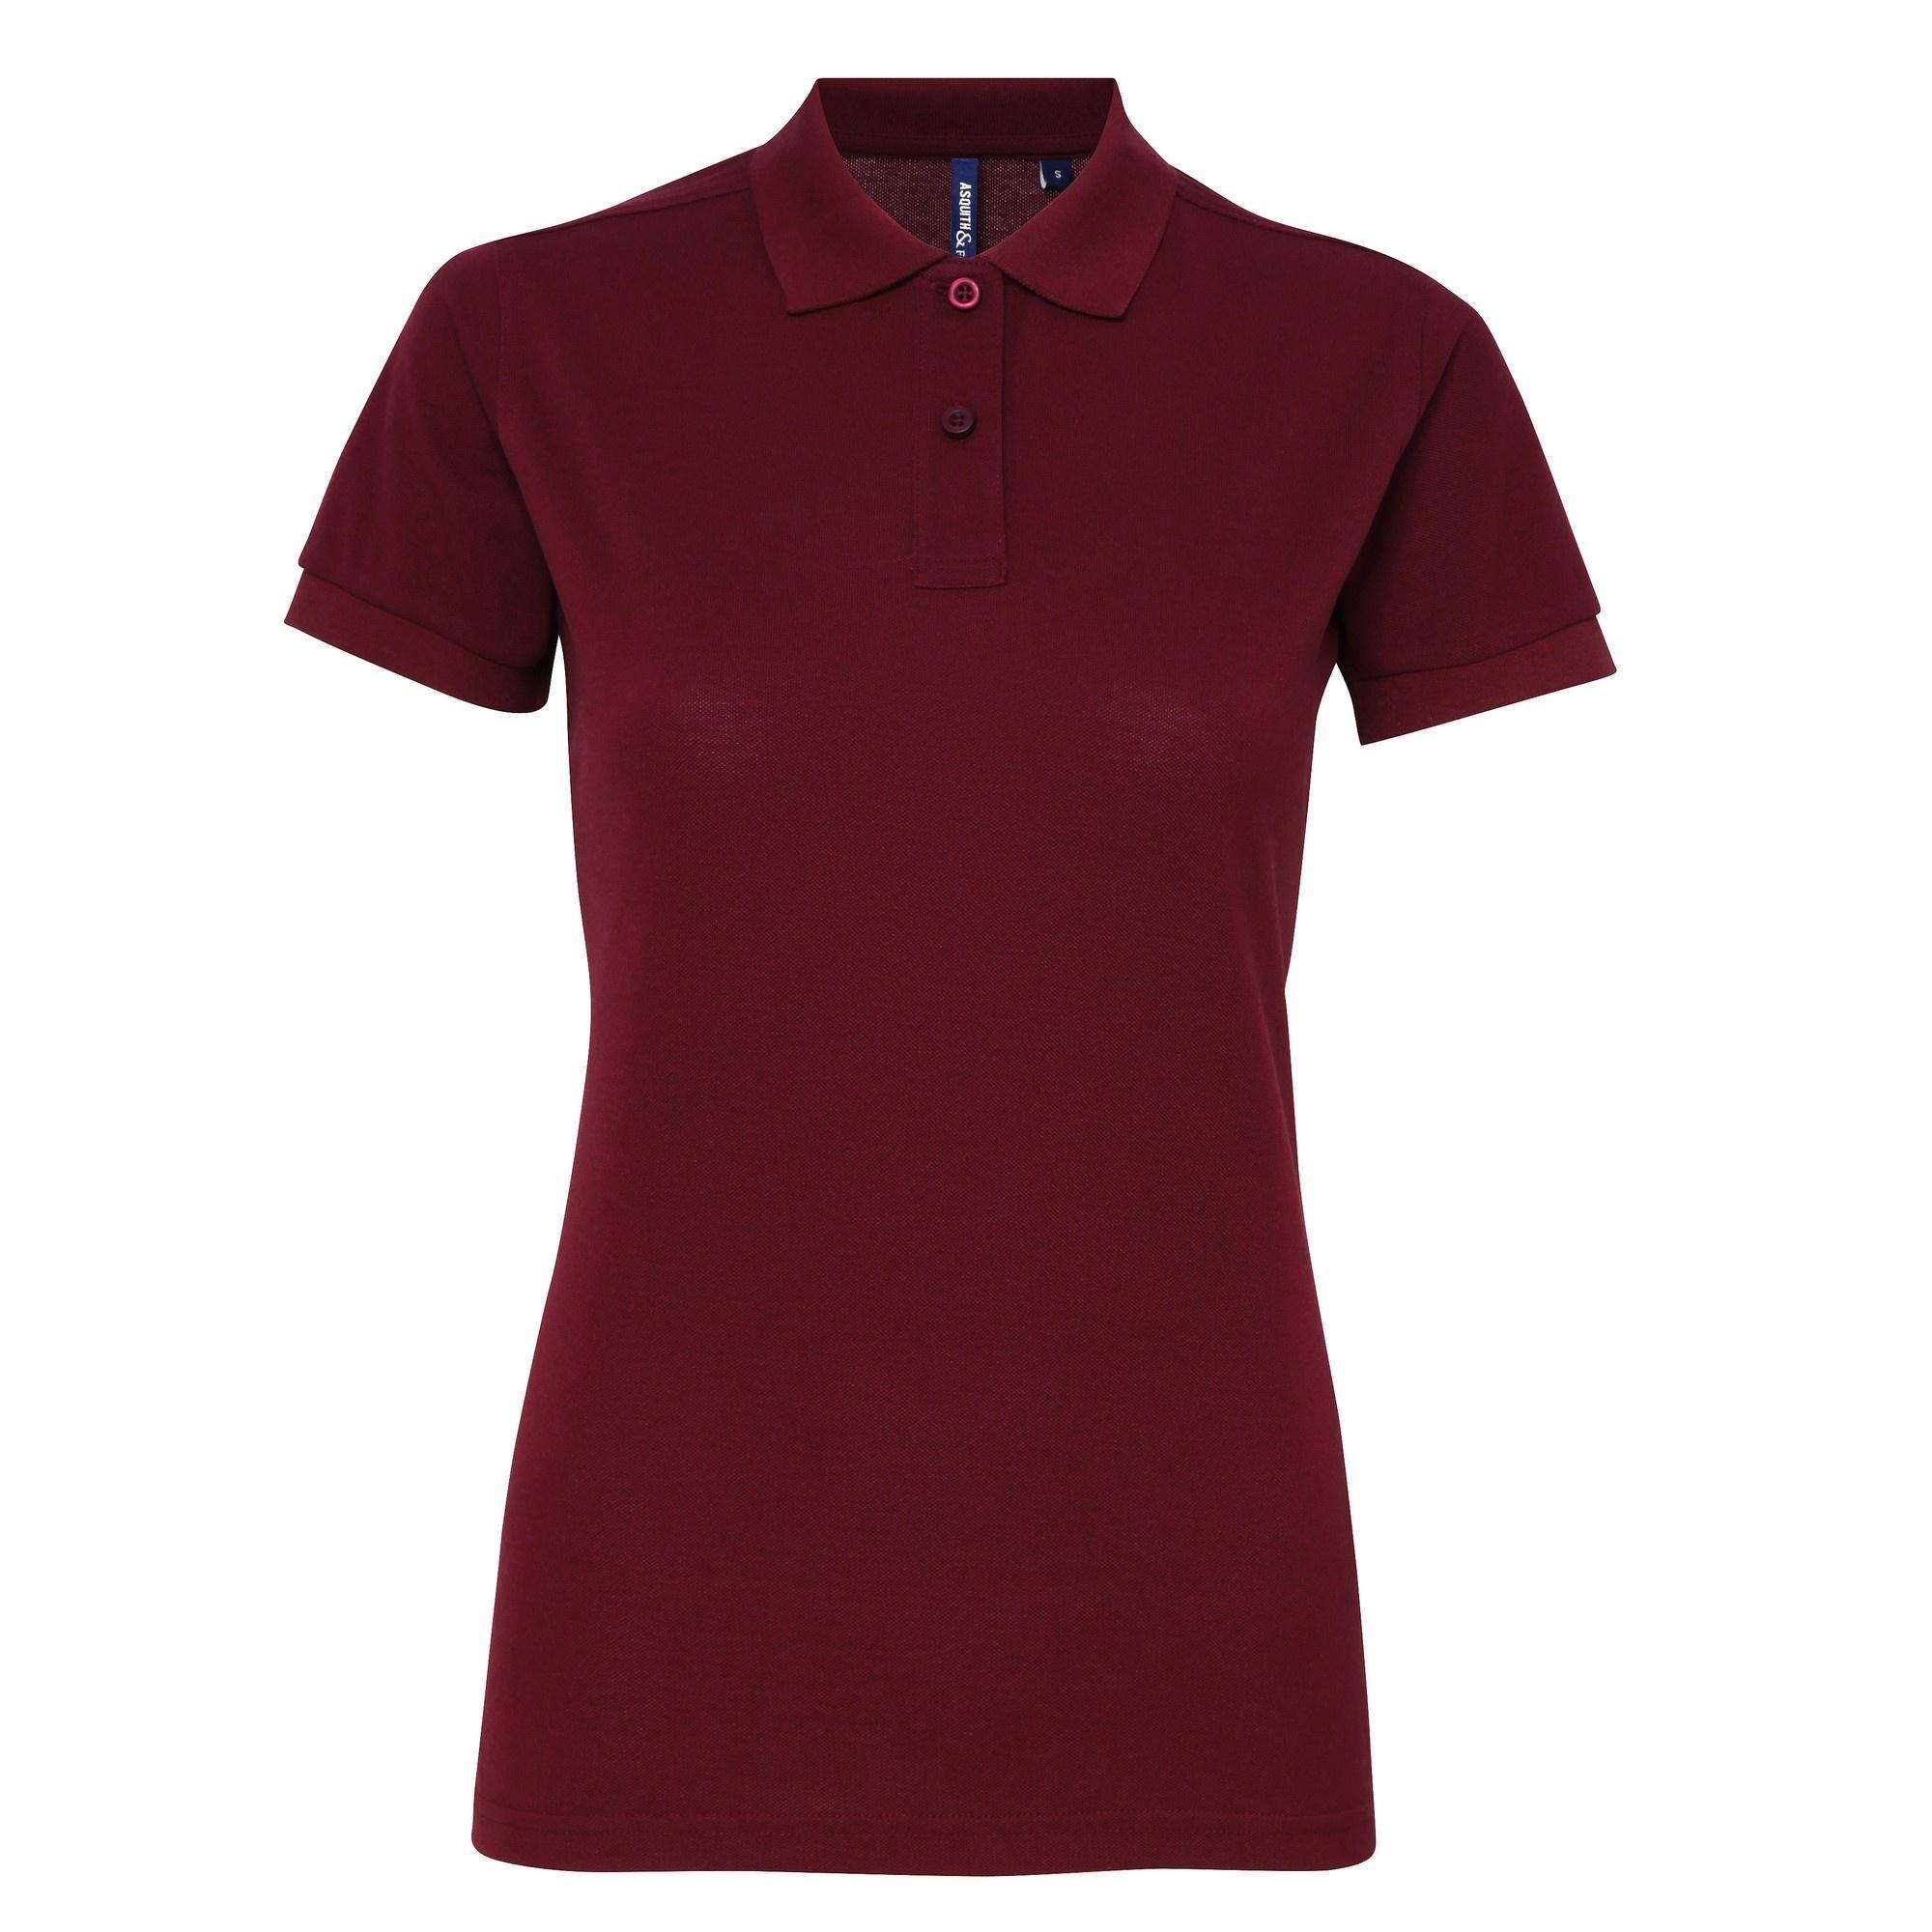 Asquith & Fox Womens/Ladies Short Sleeve Performance Blend Polo Shirt (Burgundy) (S)